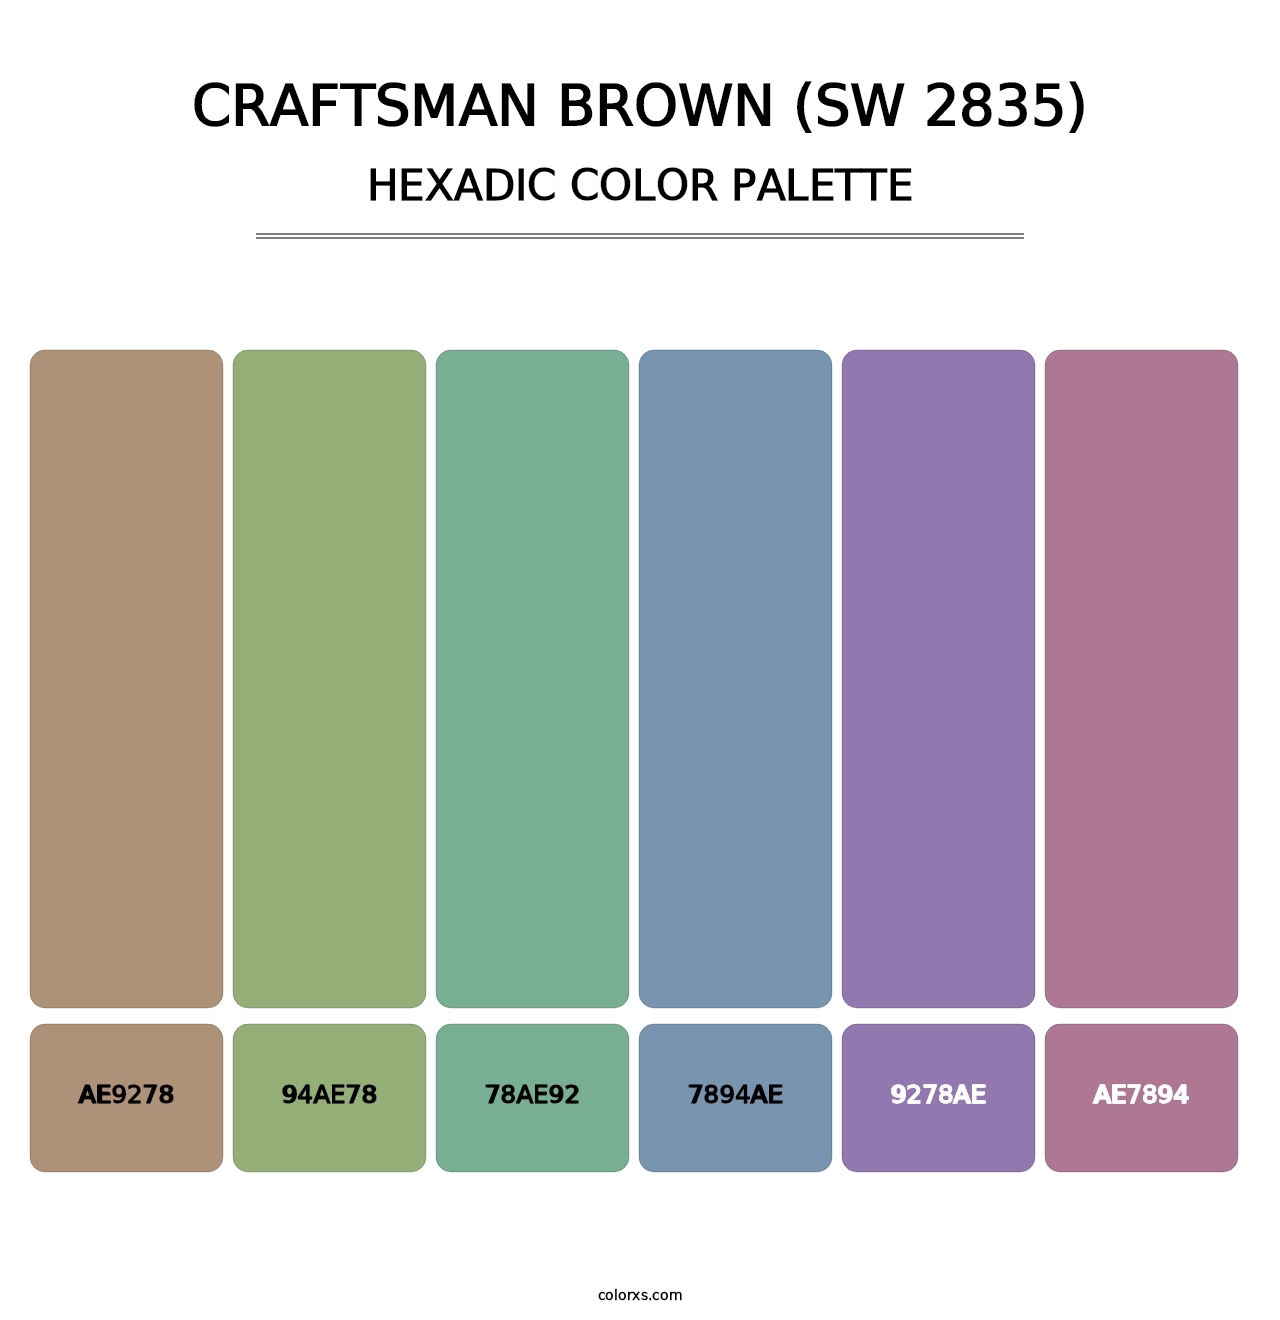 Craftsman Brown (SW 2835) - Hexadic Color Palette